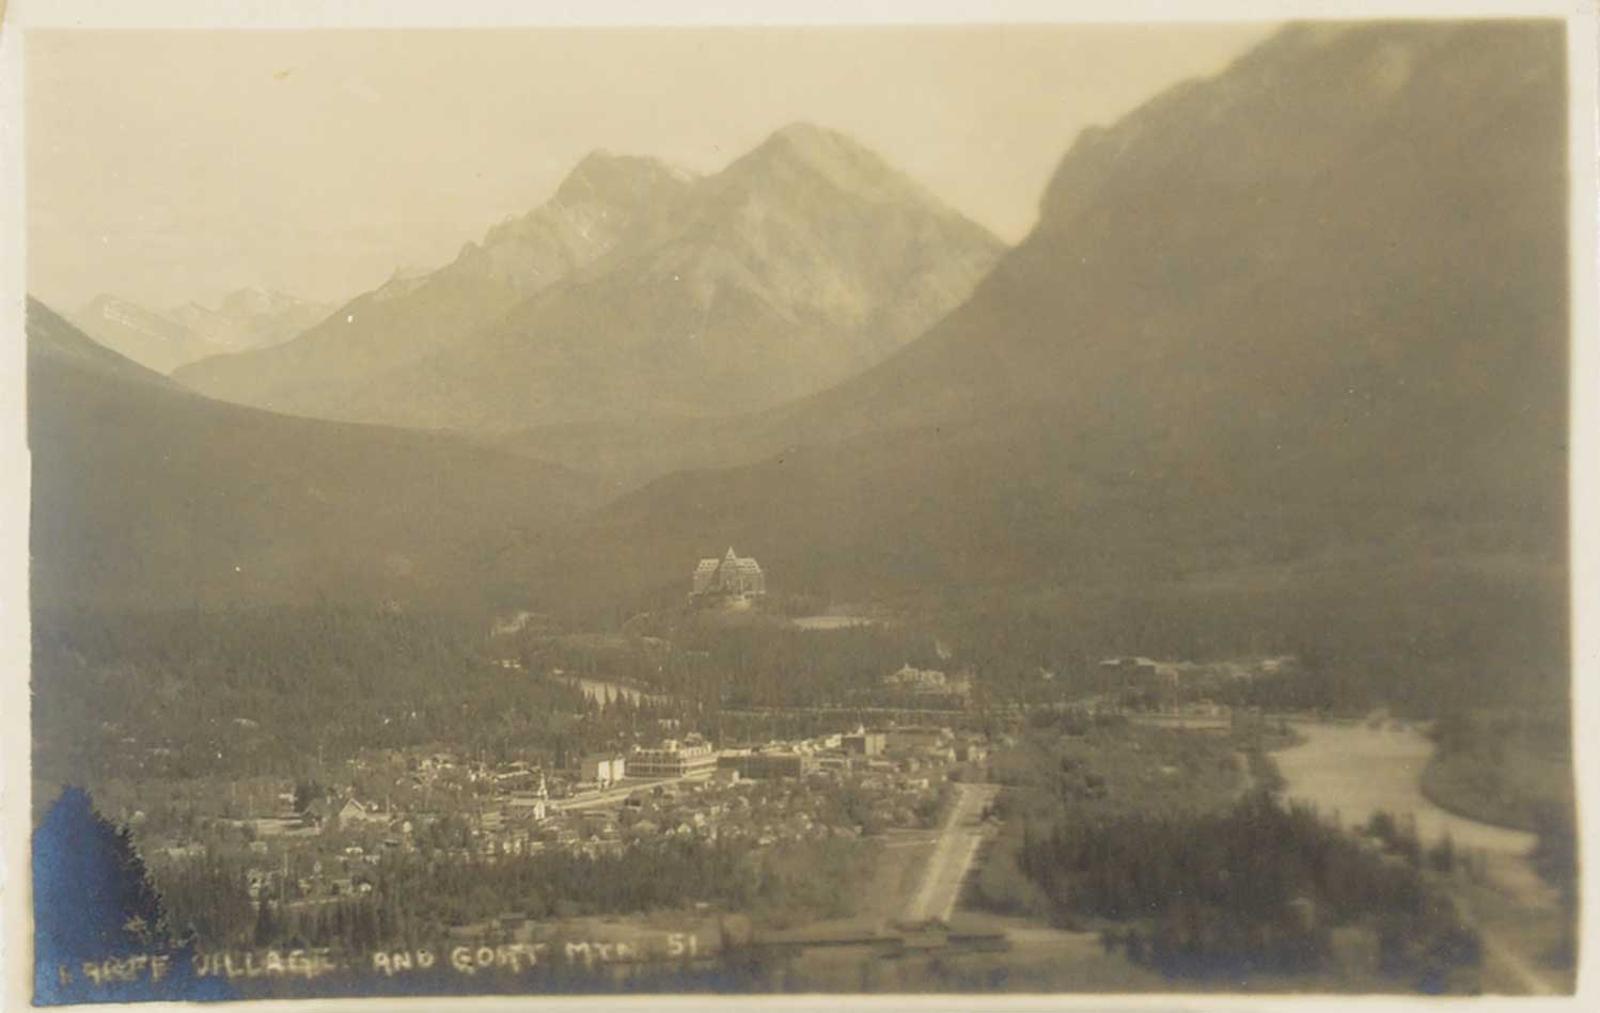 Byron Harmon - Banff Village and Goat Mountain No.51